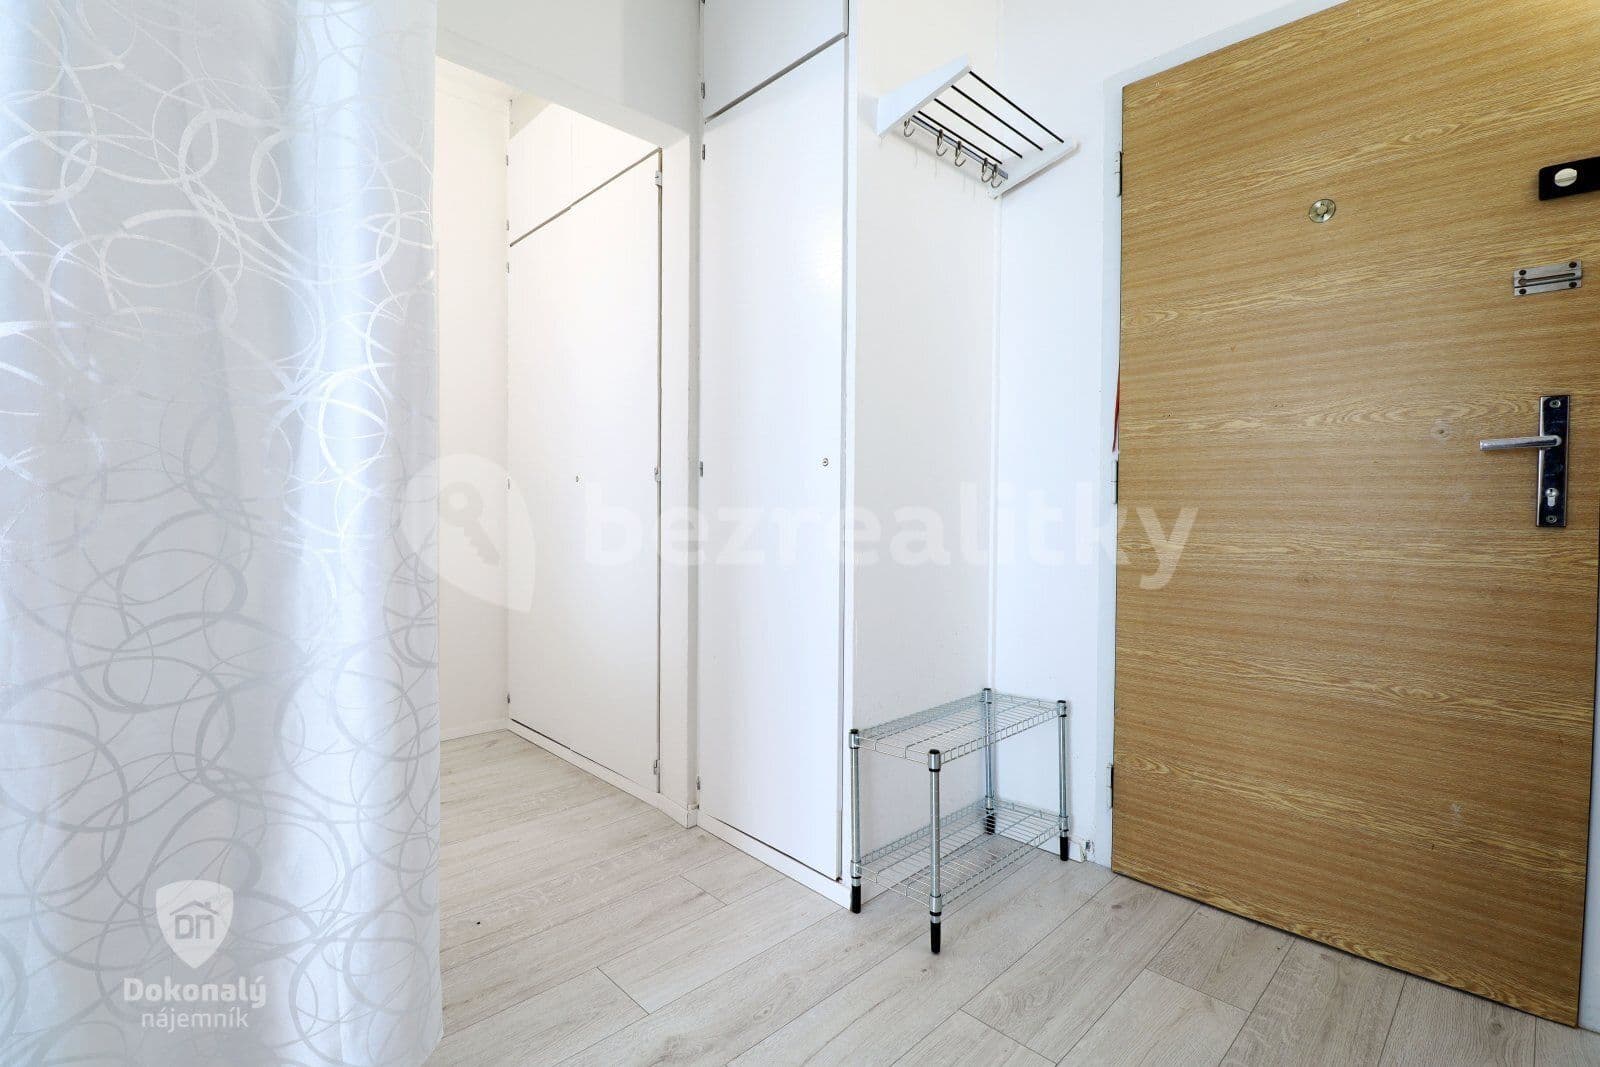 1 bedroom with open-plan kitchen flat to rent, 48 m², Gabinova, Prague, Prague